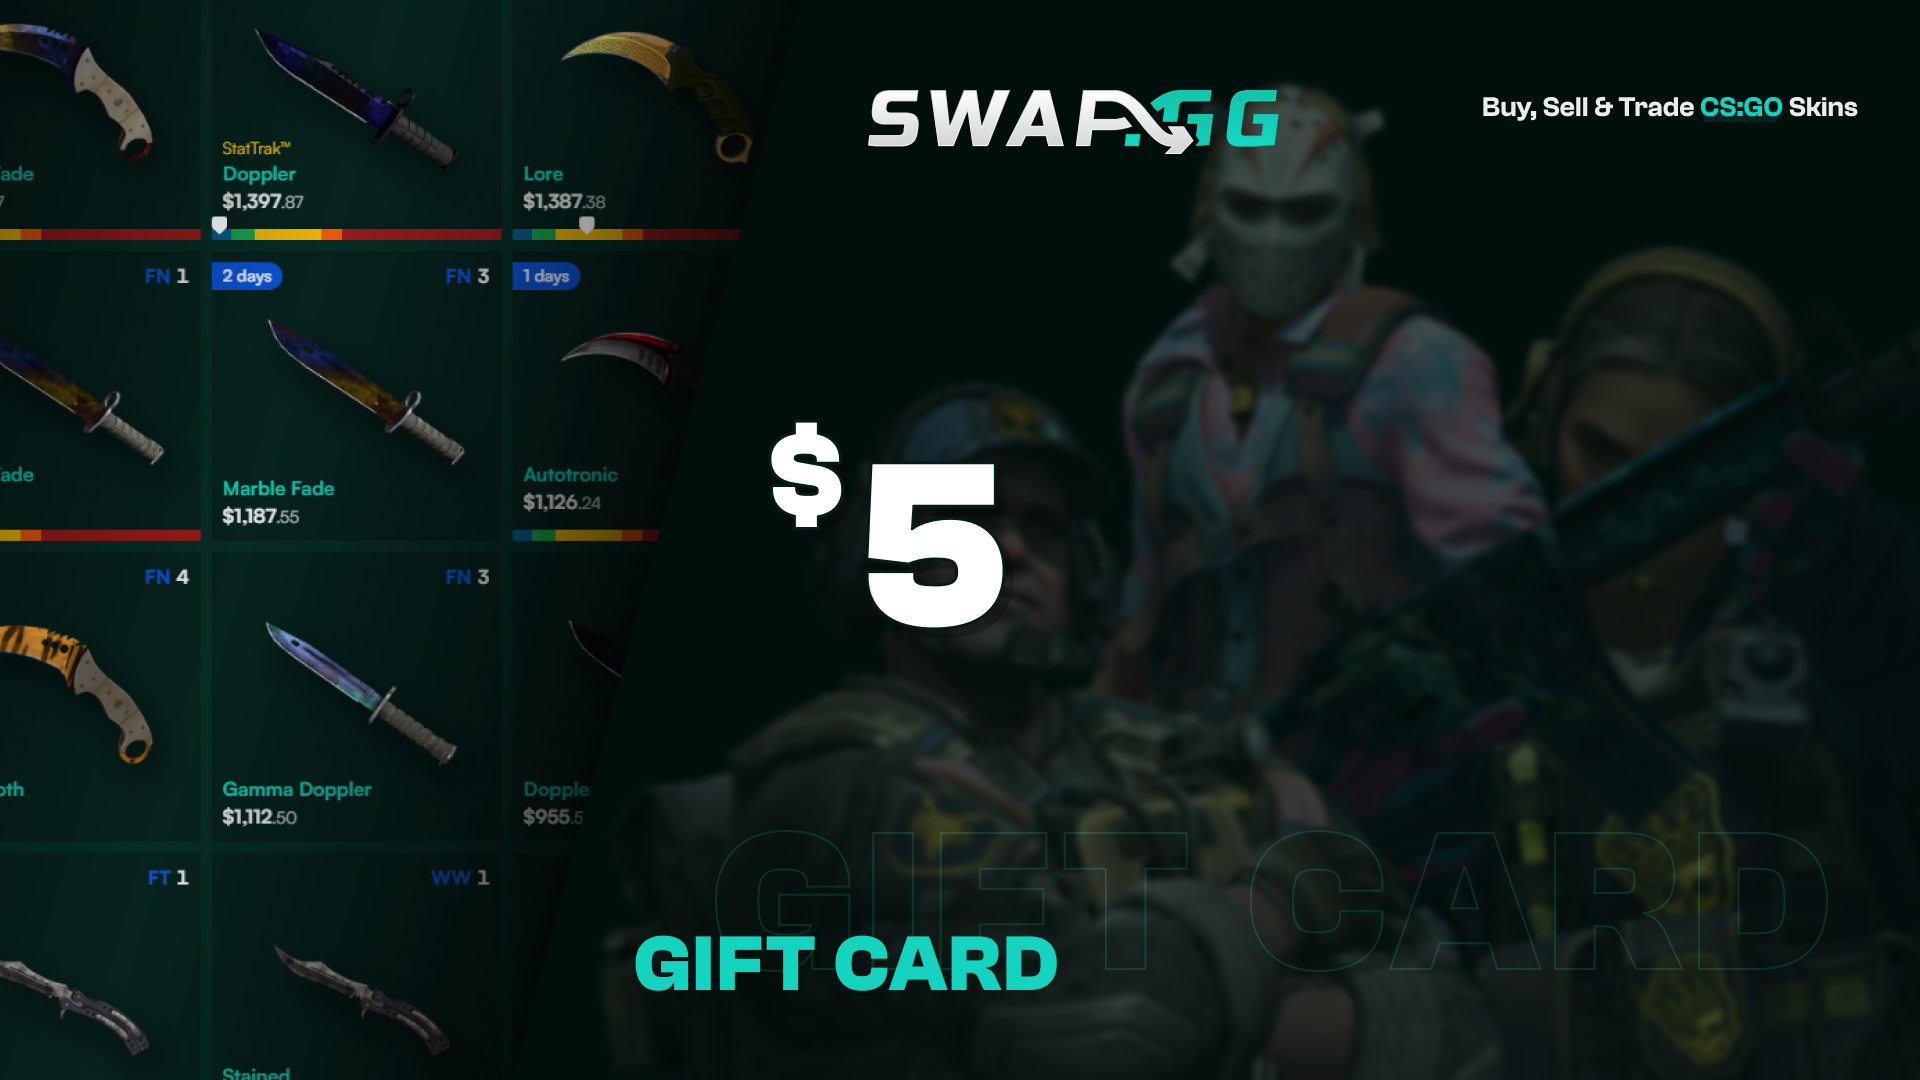 Swap.gg $5 Gift Card 3.97 usd